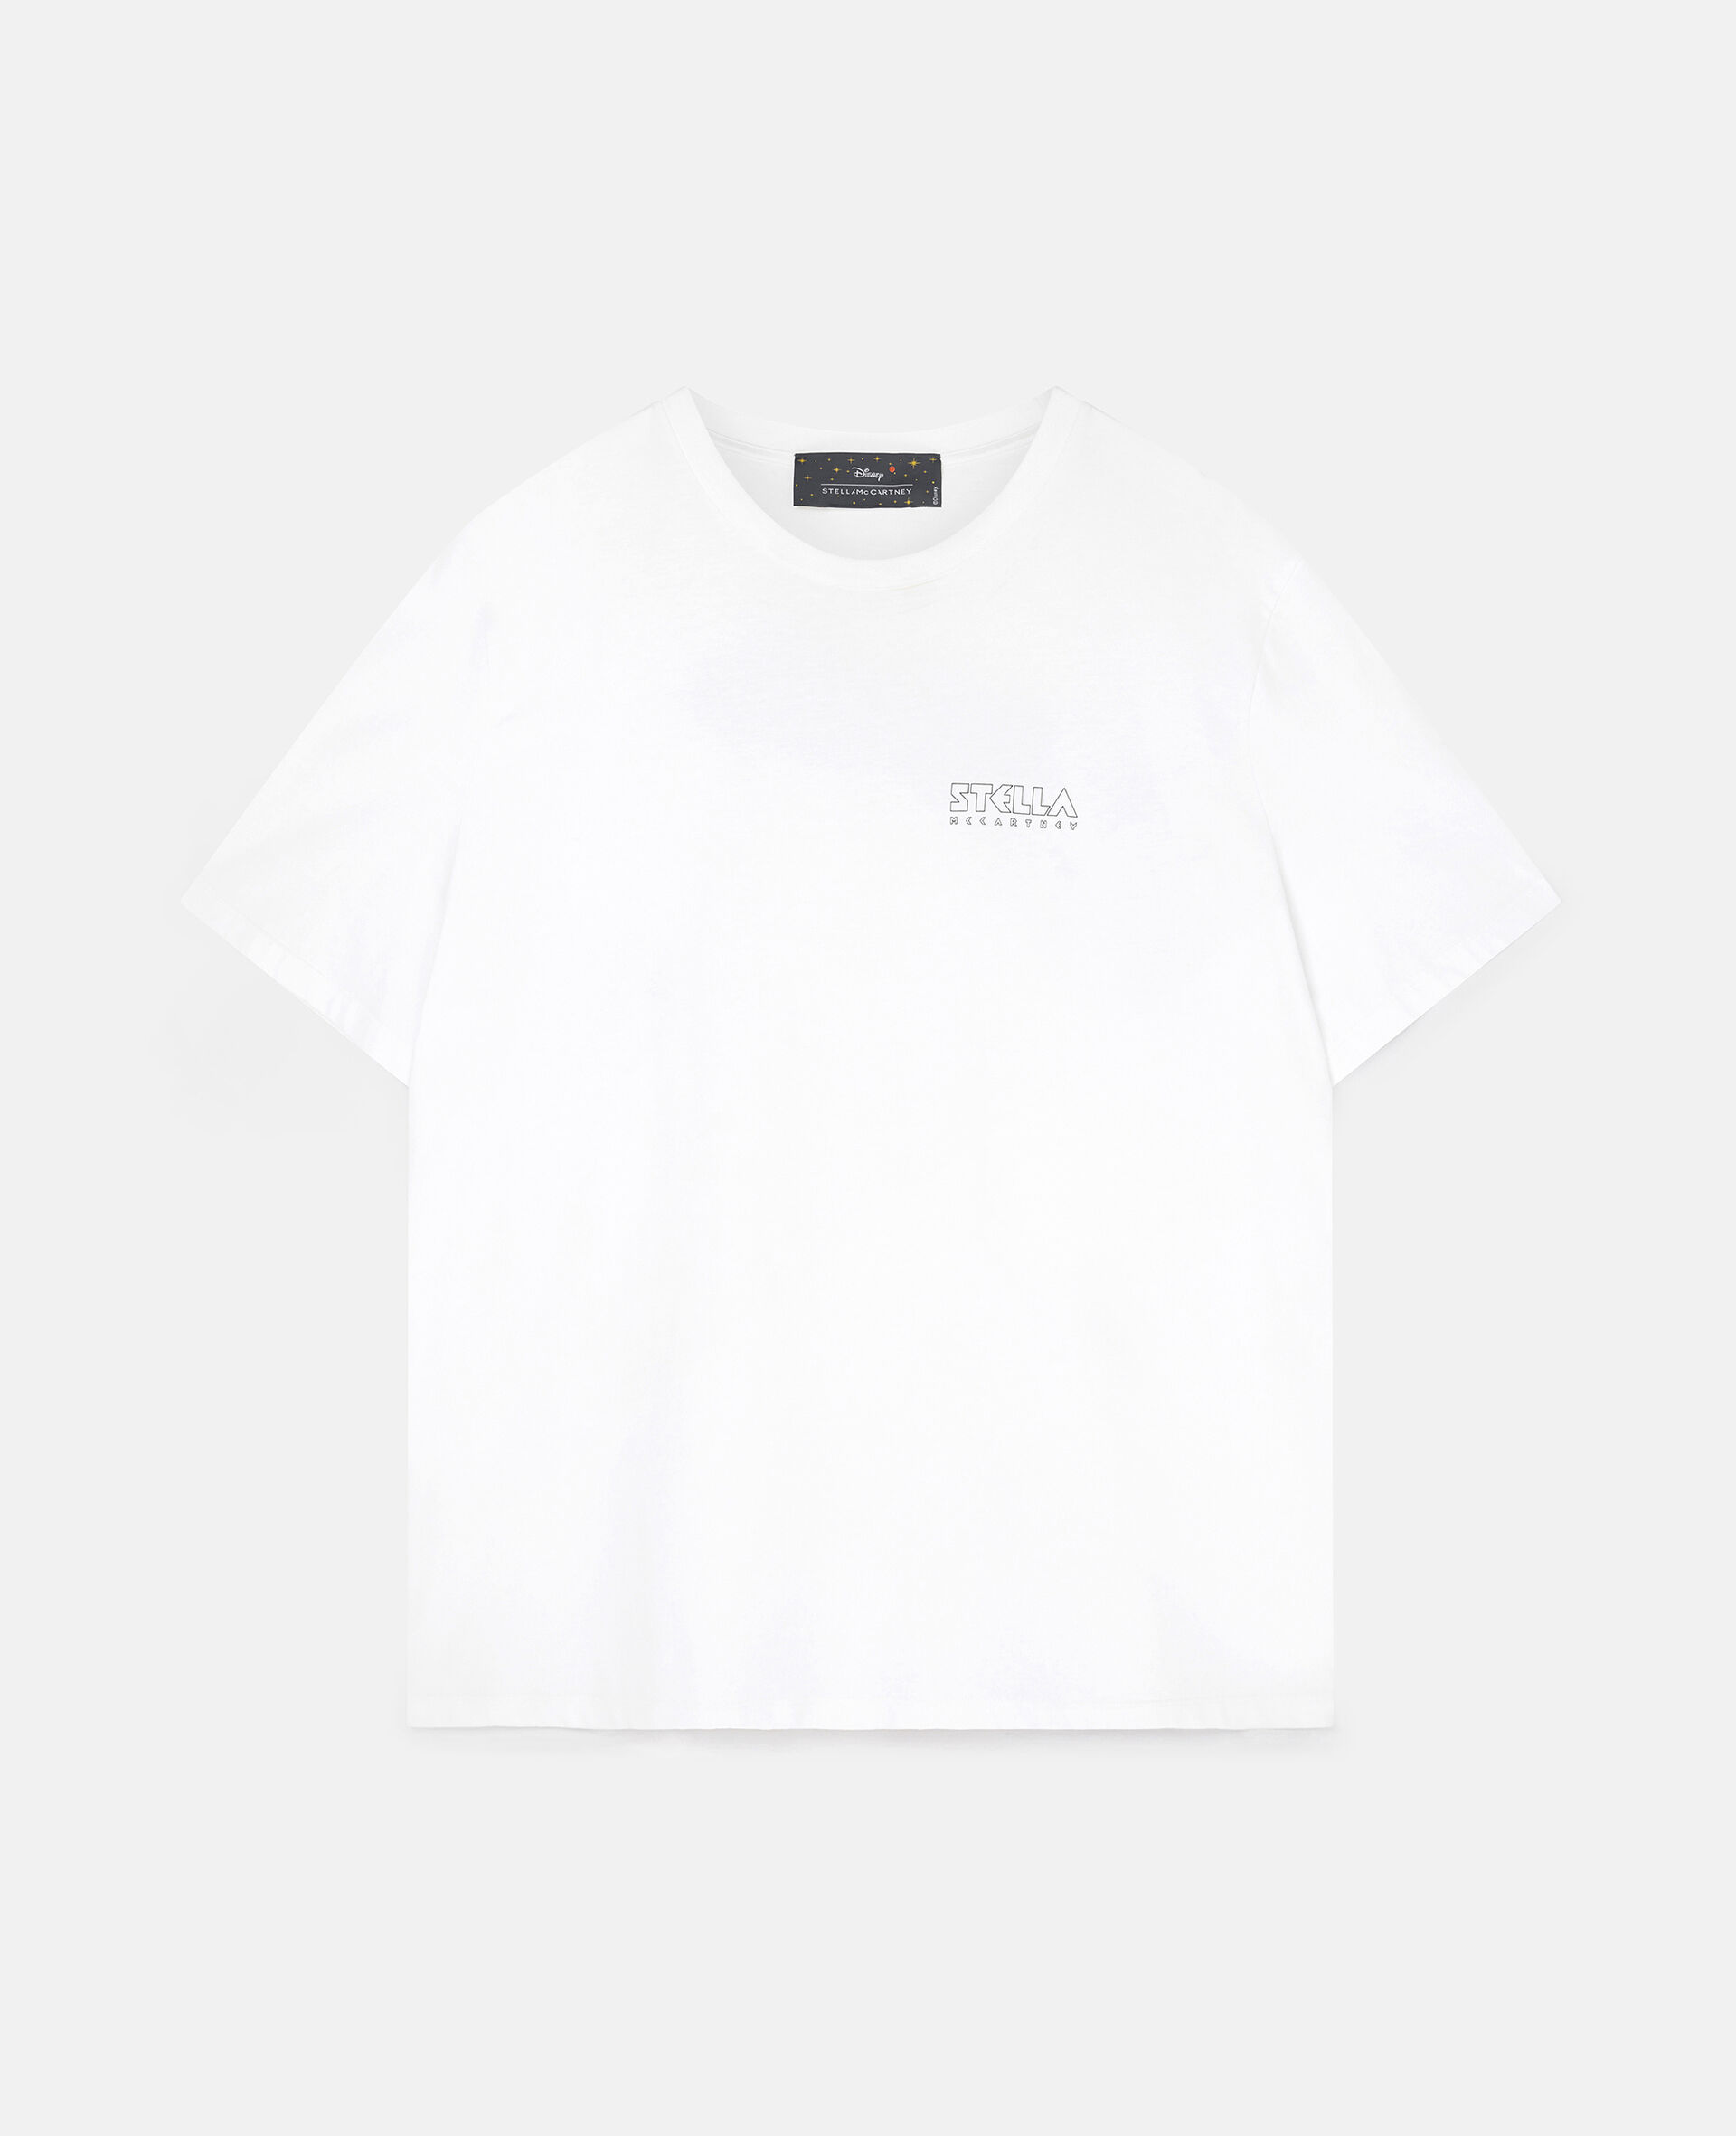 Women's Tops, Shirts & T-Shirts | Organic Cotton & Silk | Stella ...